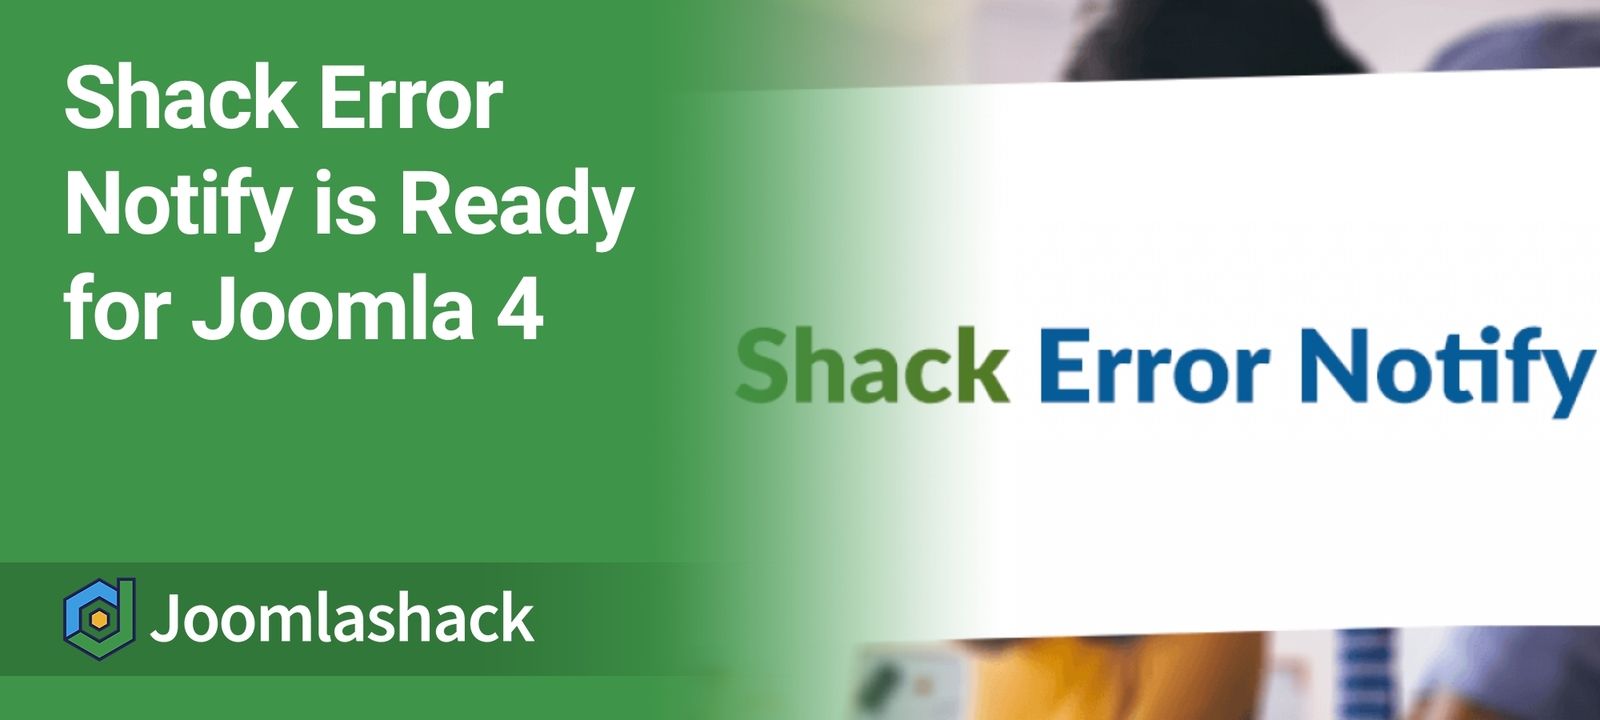 Shack Error Notify is Ready for Joomla 4